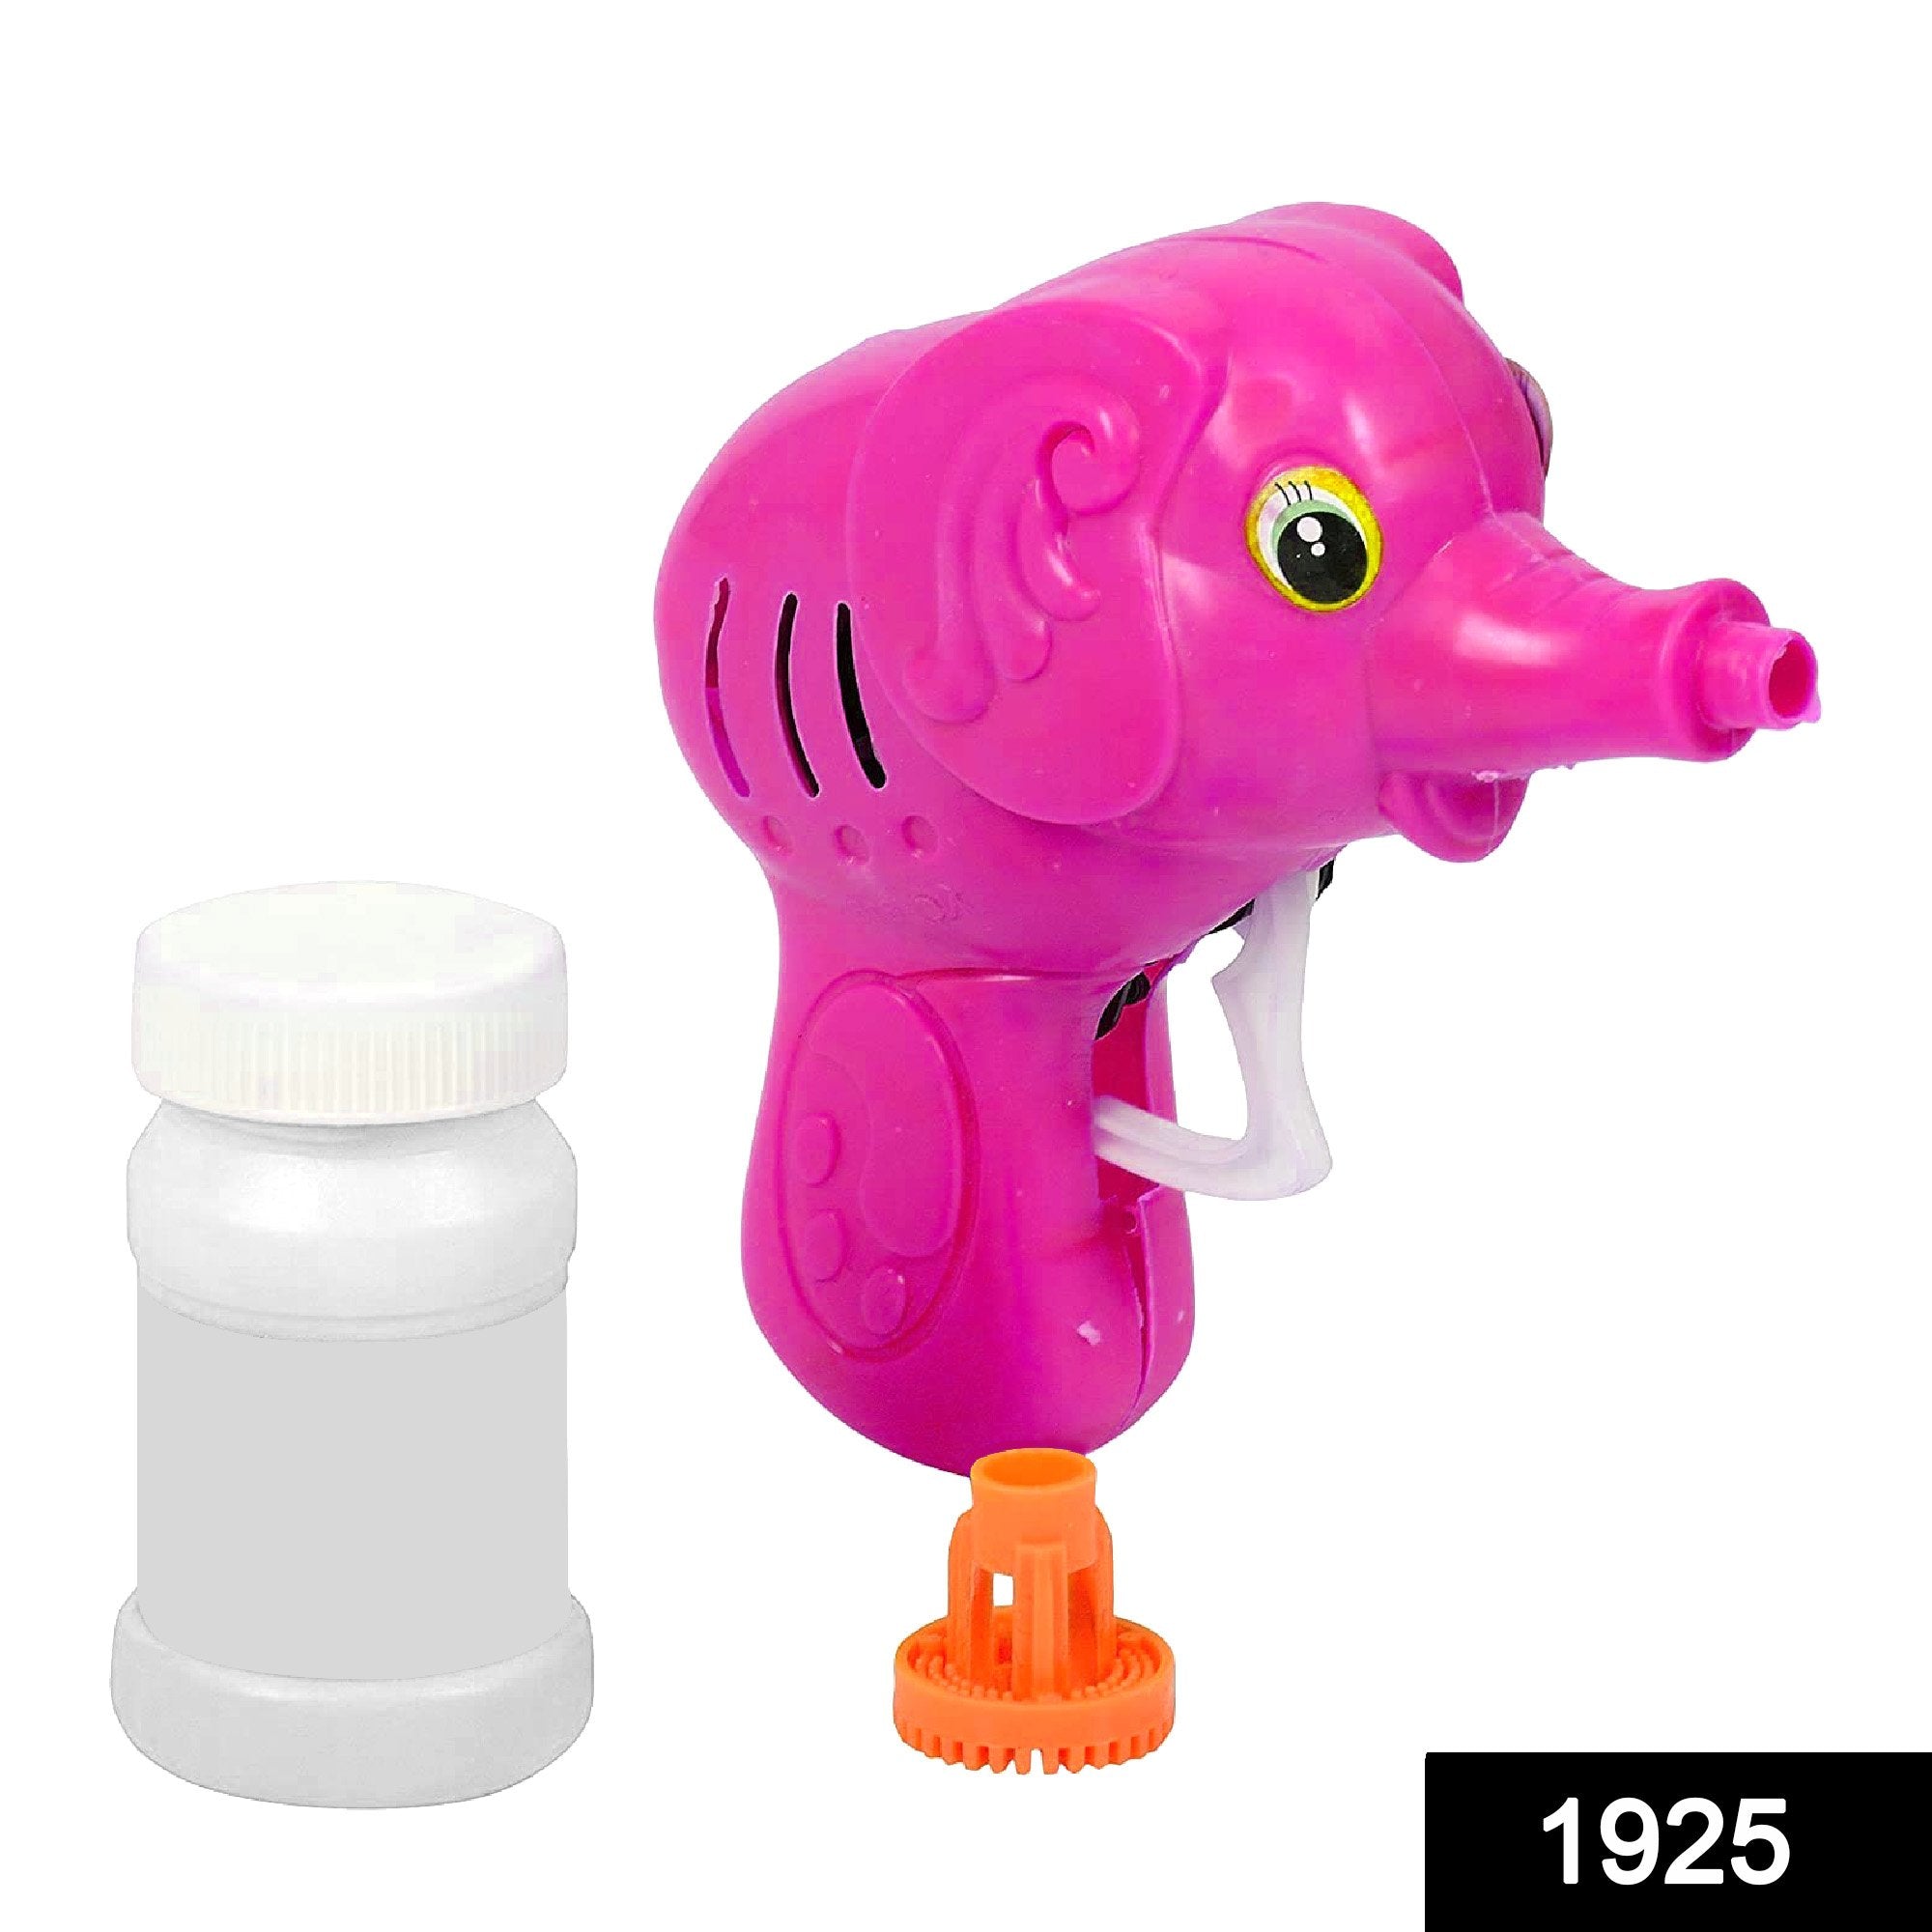 1925 elephant bubble gun for kids / kids toys bubble gun Toy Bubble Maker - SkyShopy